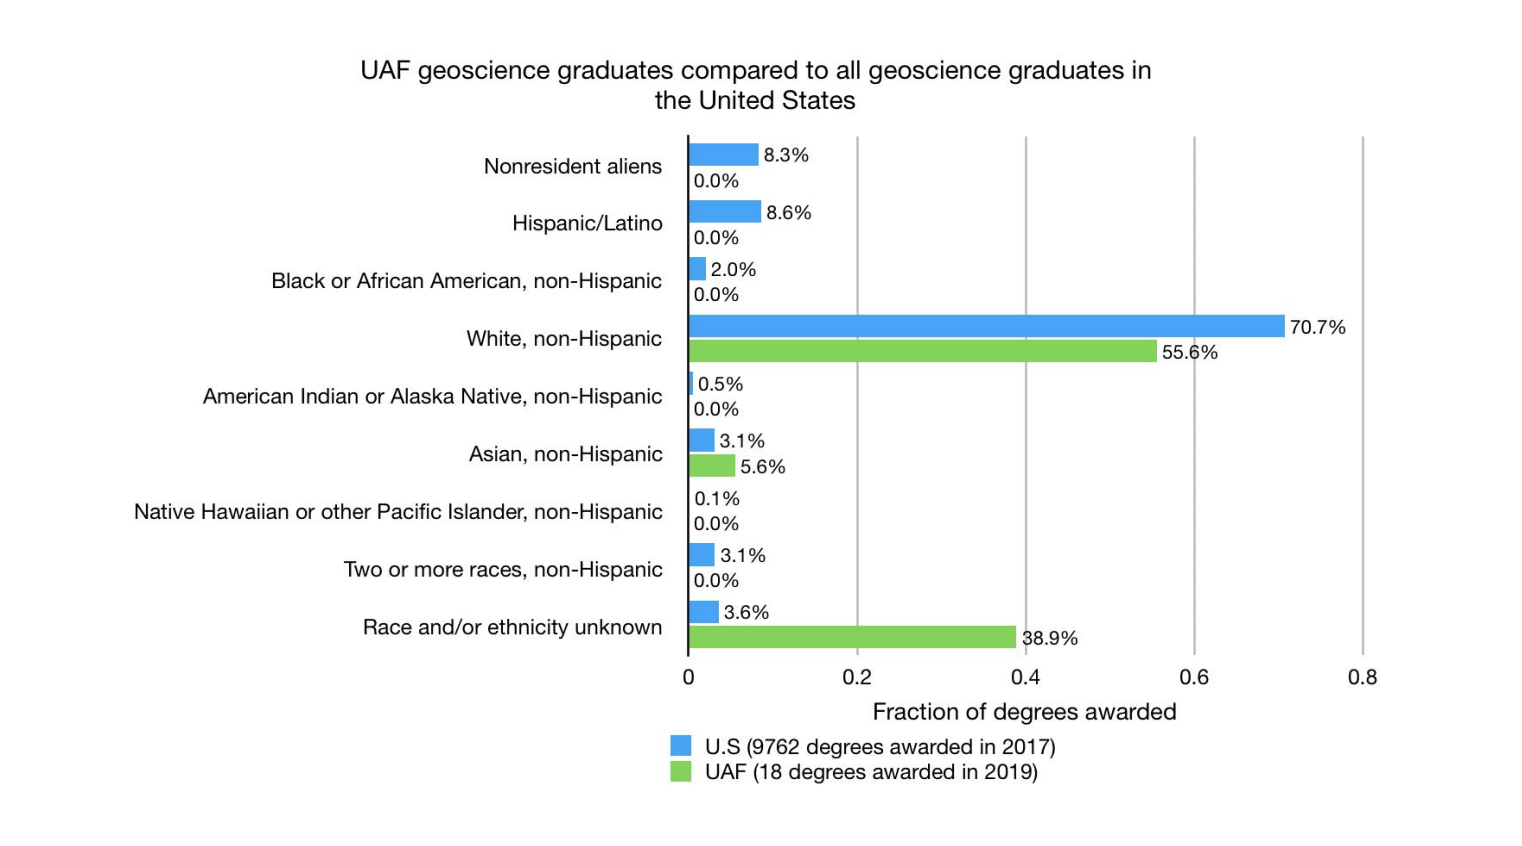 Race of UAF geoscience graduates compared to United States geoscience graduates